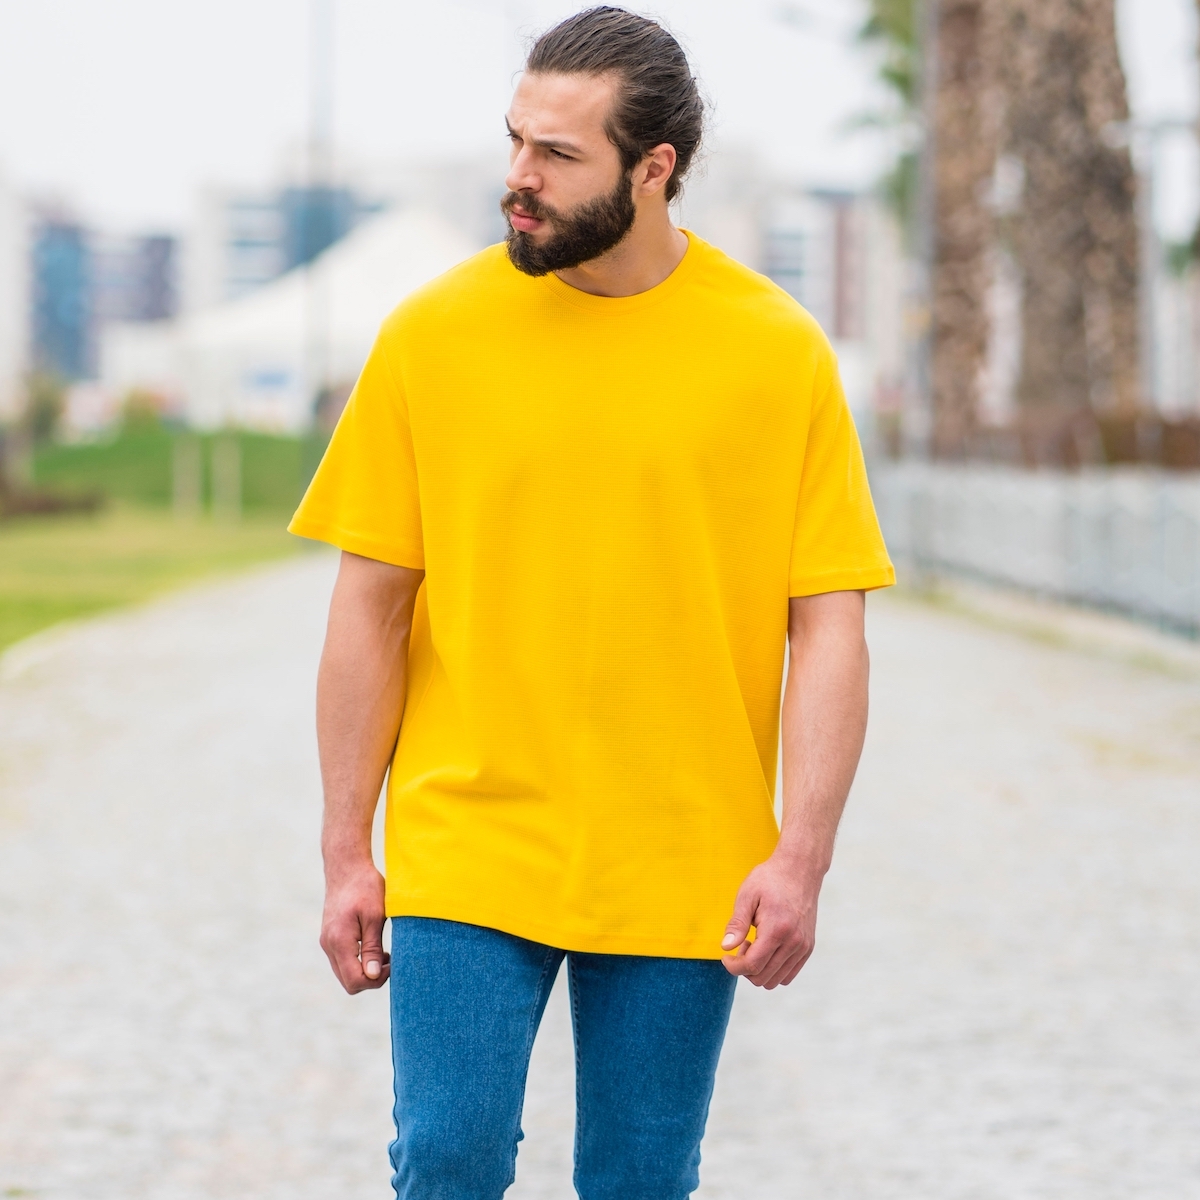 Oversized Yellow T Shirt Outfit Mens - kropkowe-kocie